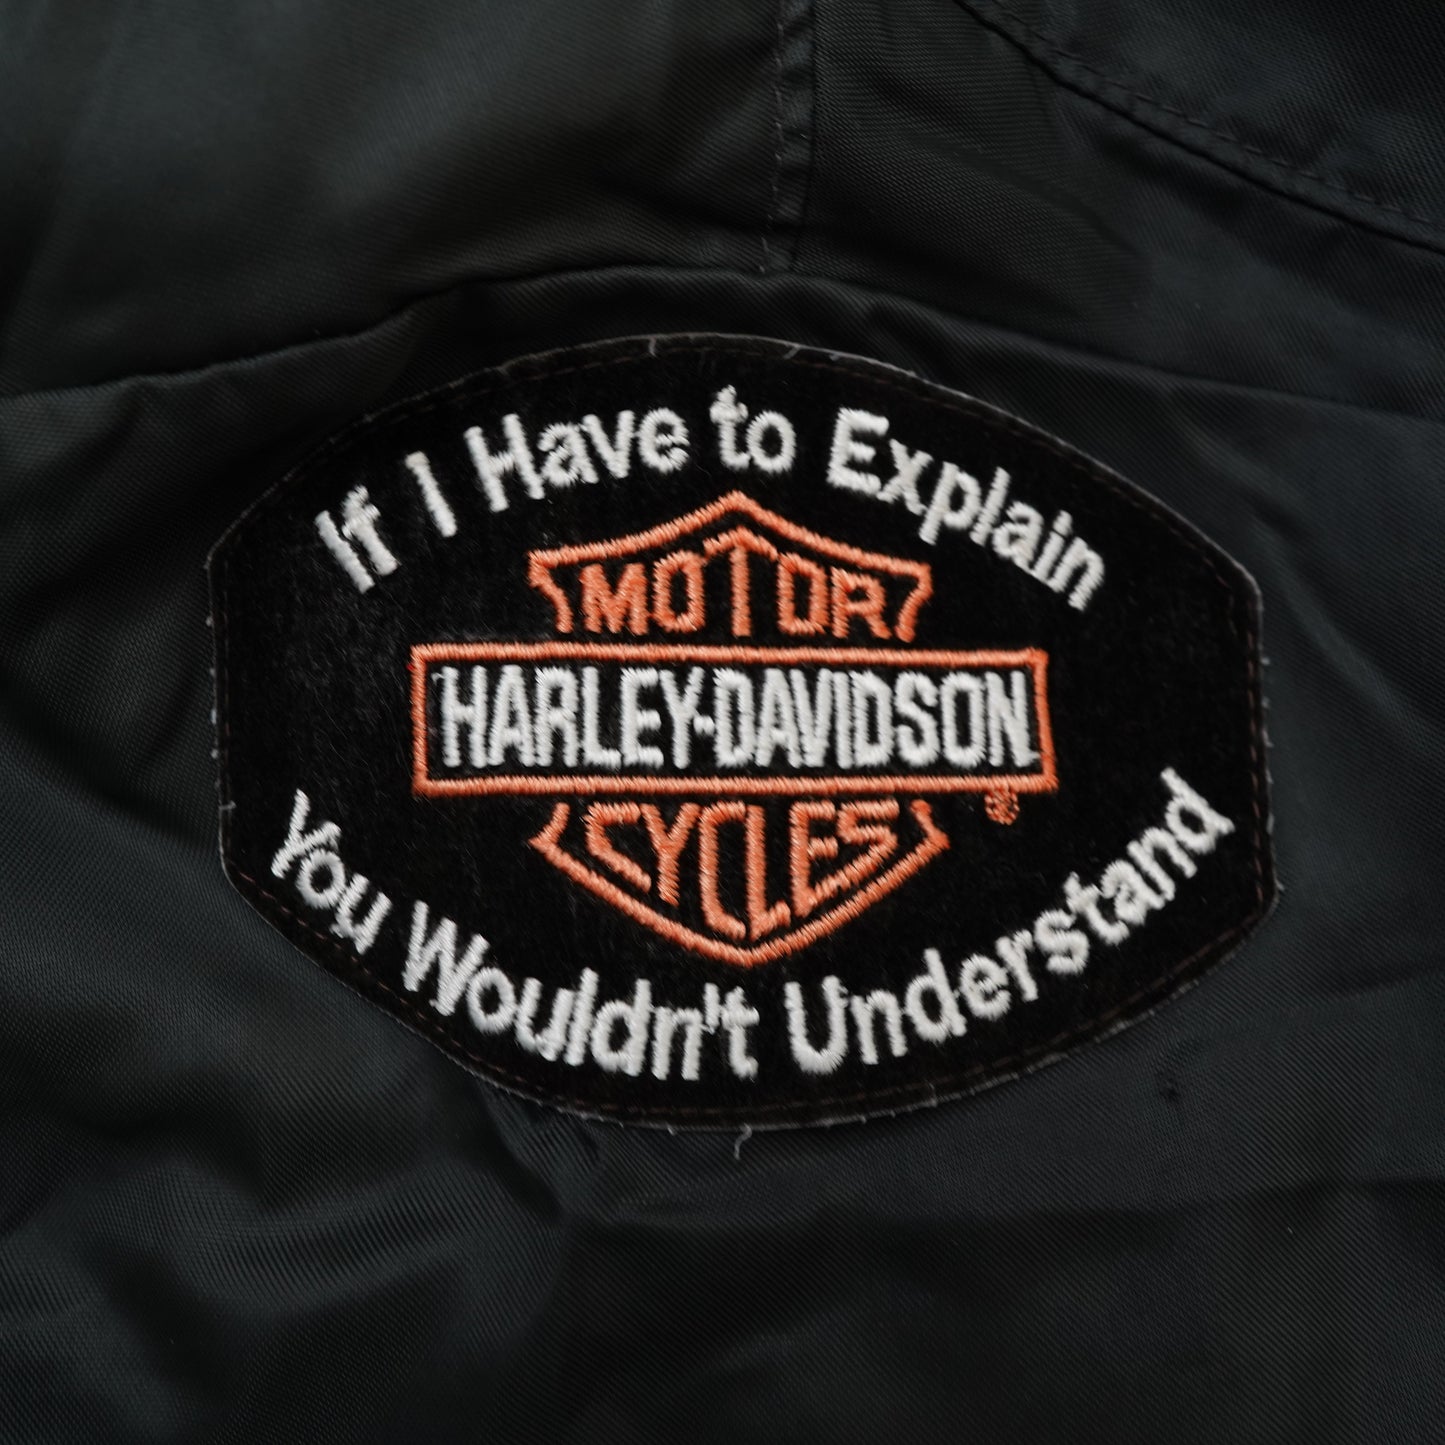 HARLEY DAVIDSON jacket